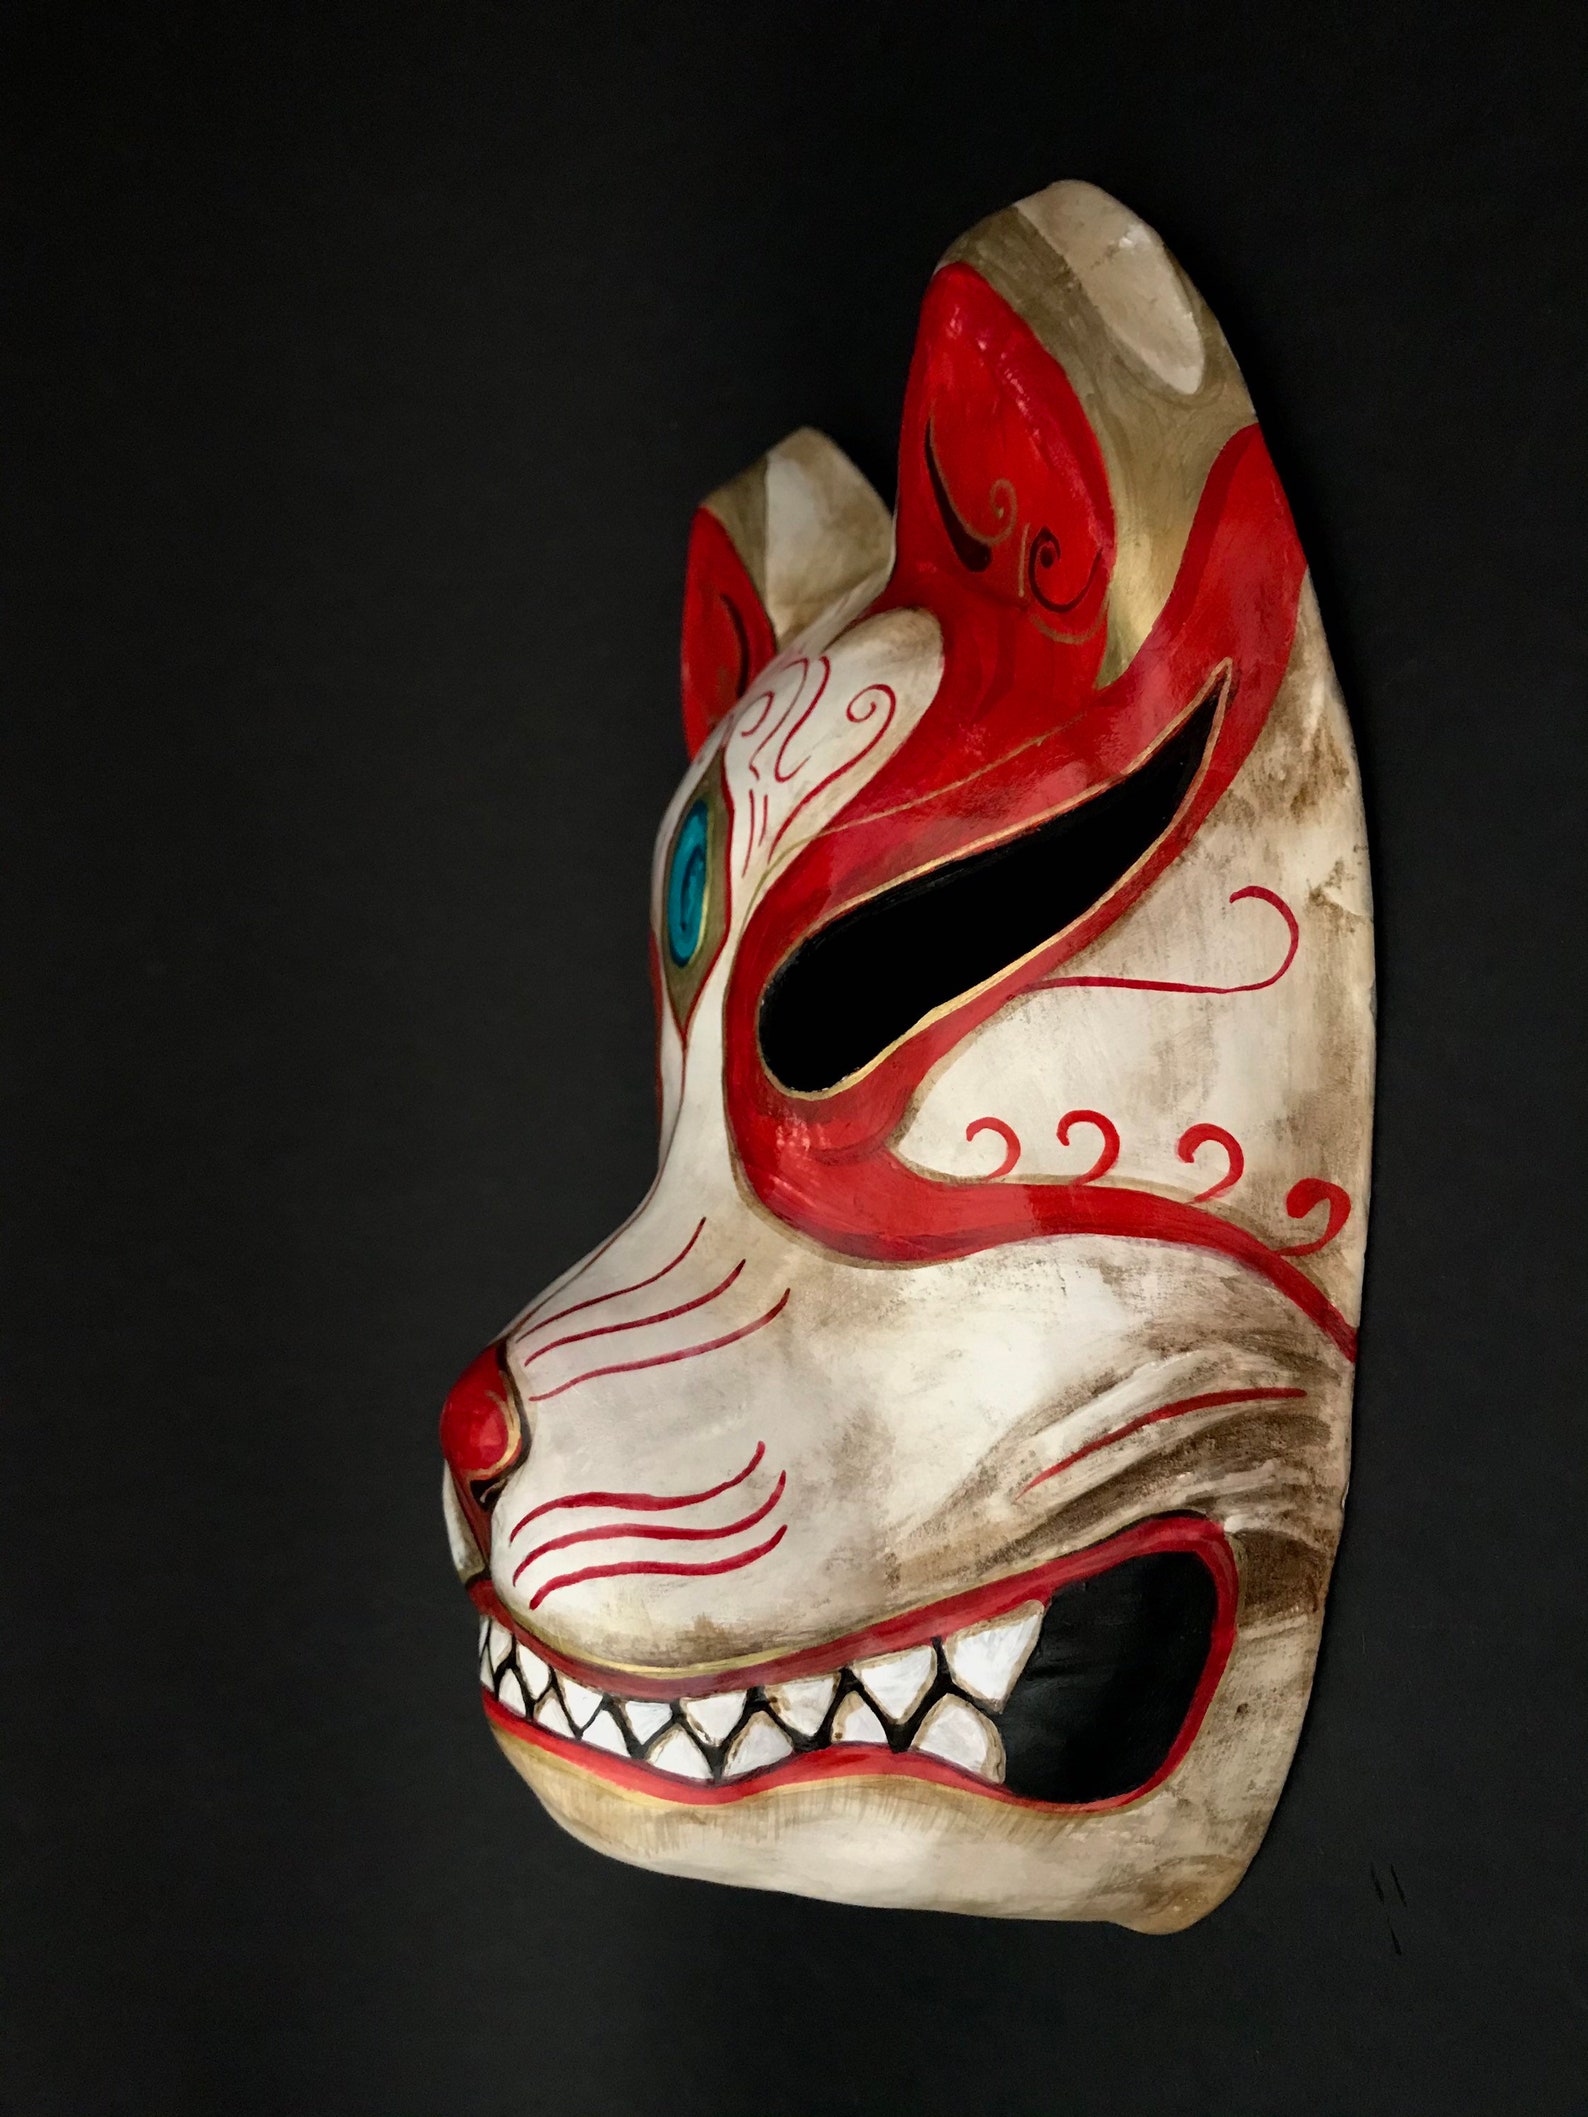 Made to Order. Kitsune Mask. Cosplay Mask. Japanese Fox. Fox - Etsy